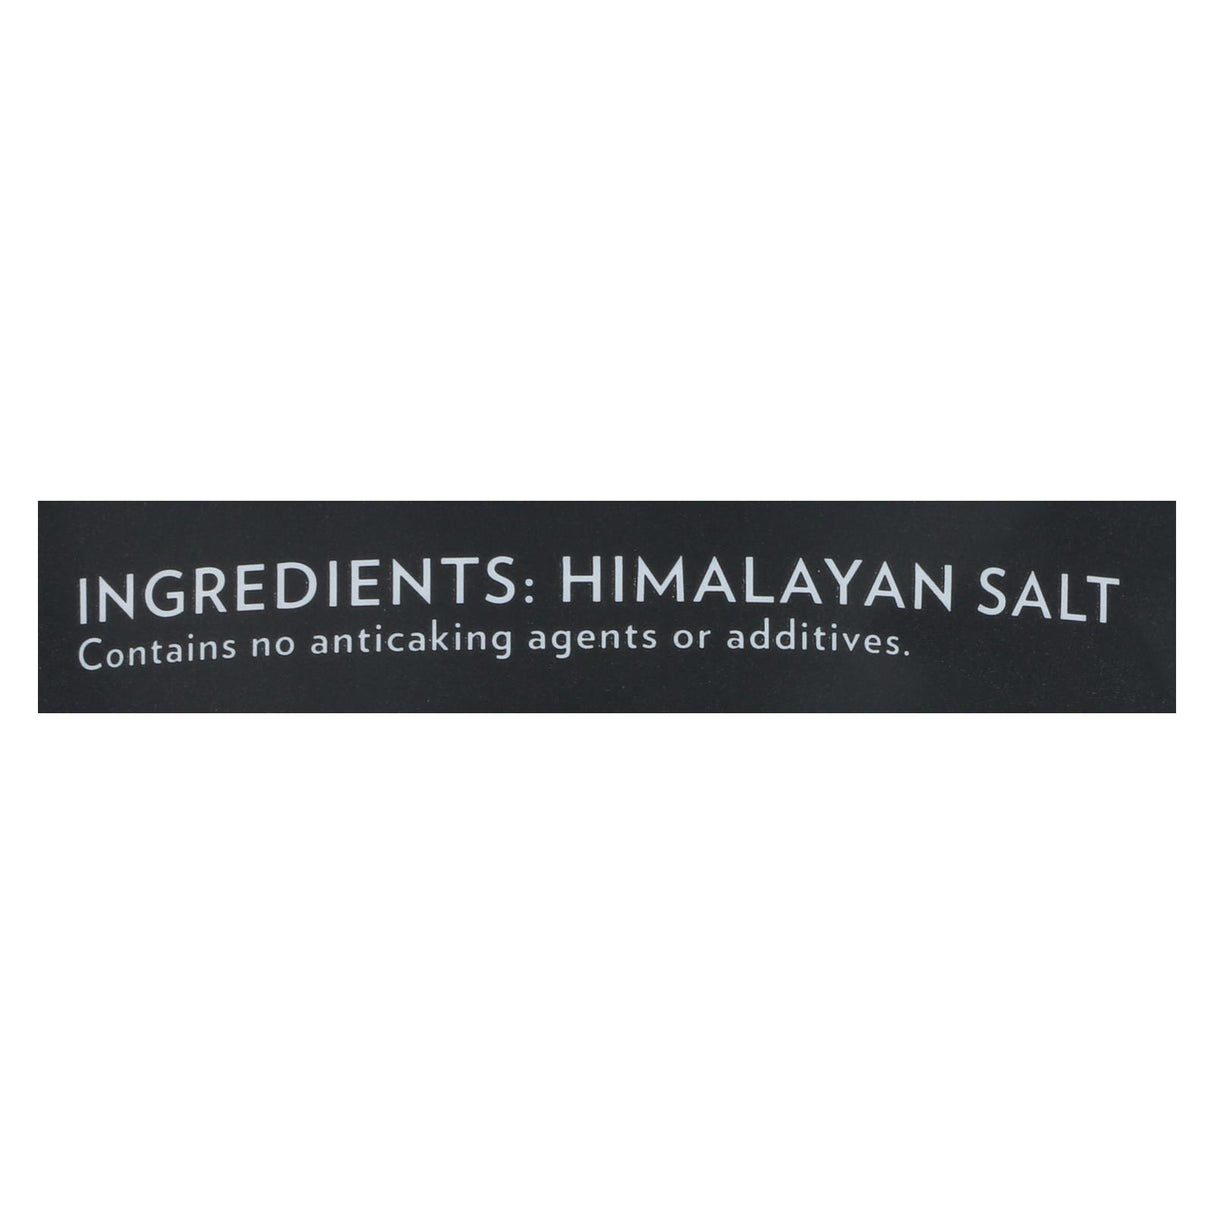 Evolution Salt Himalayan Pink Salt Fine - 6 Pack of 16 Oz - Cozy Farm 